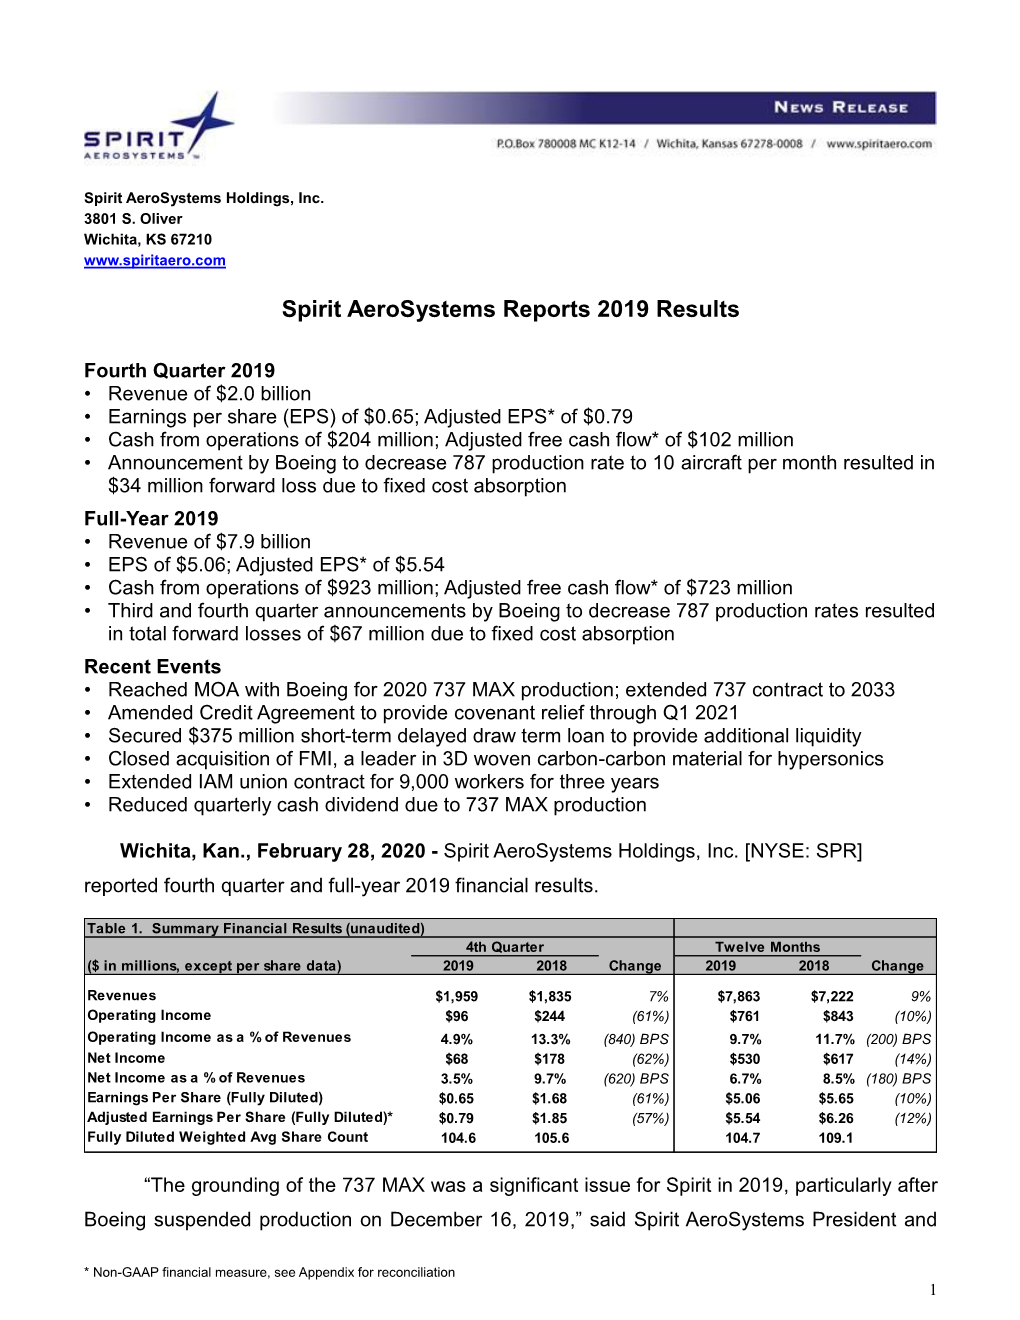 Spirit Aerosystems Reports 2019 Results